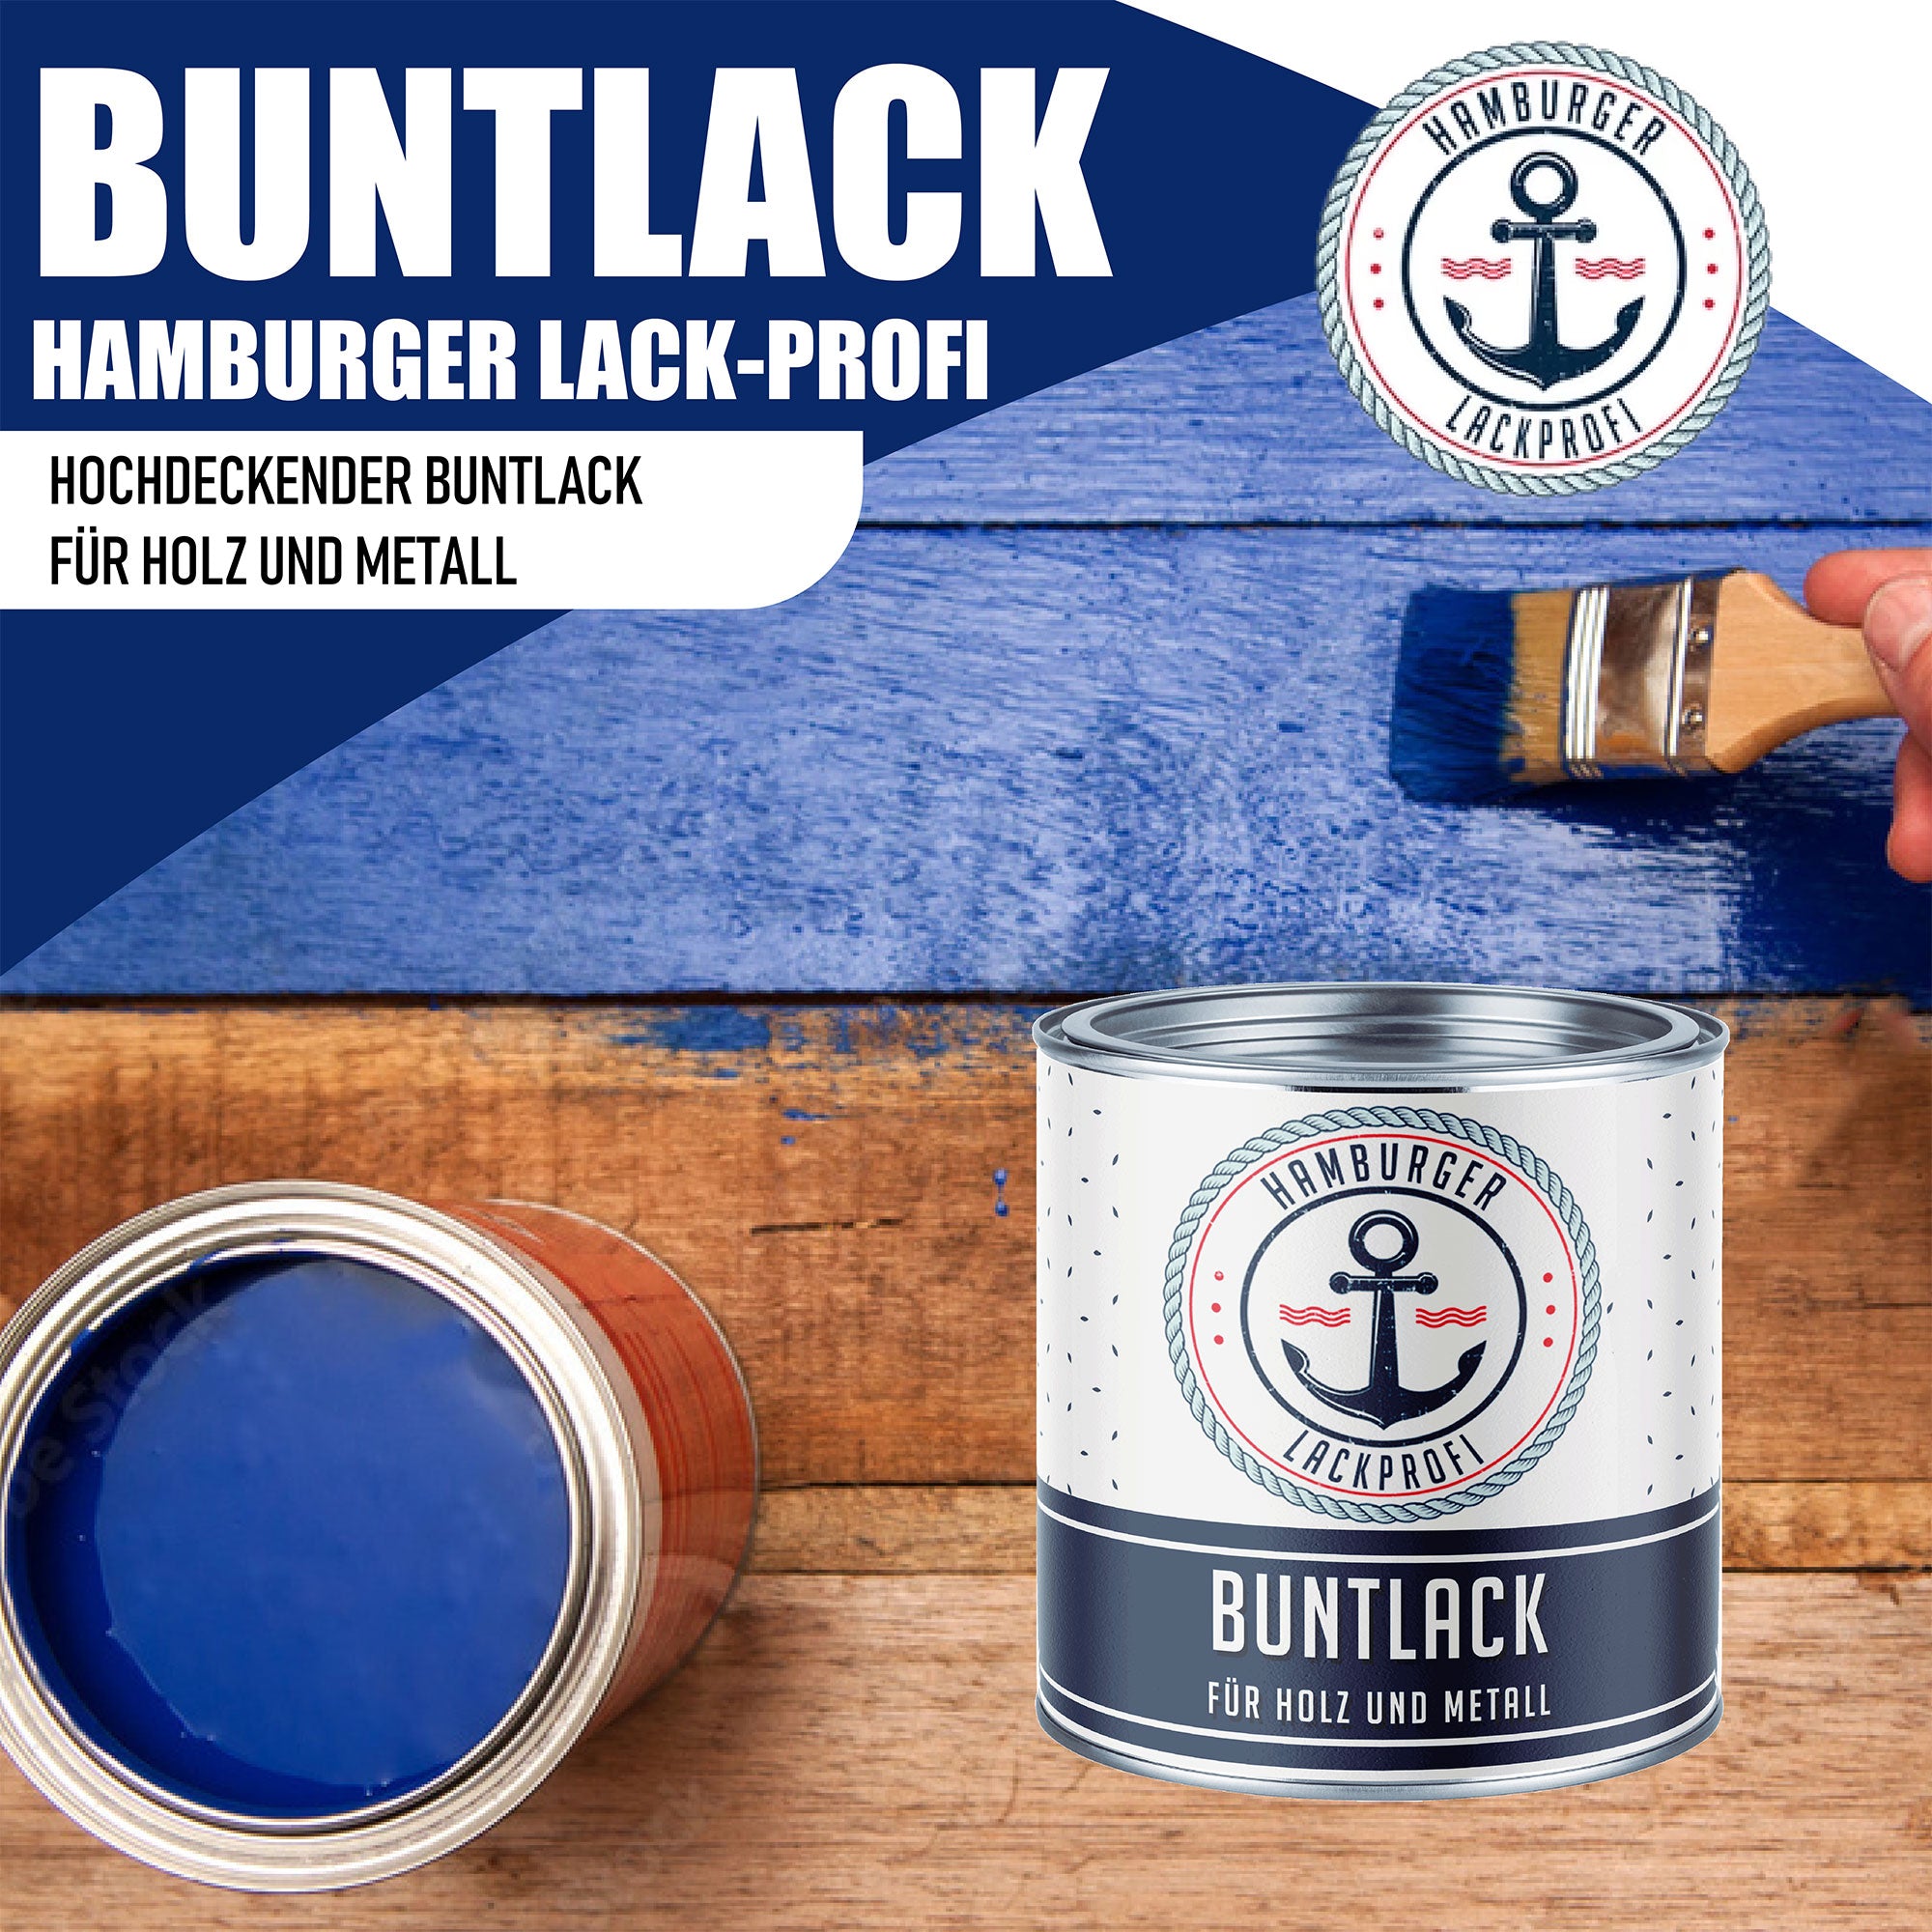 Hamburger Lack-Profi Buntlack Platingrau RAL 7036 - Robuster Kunstharzlack